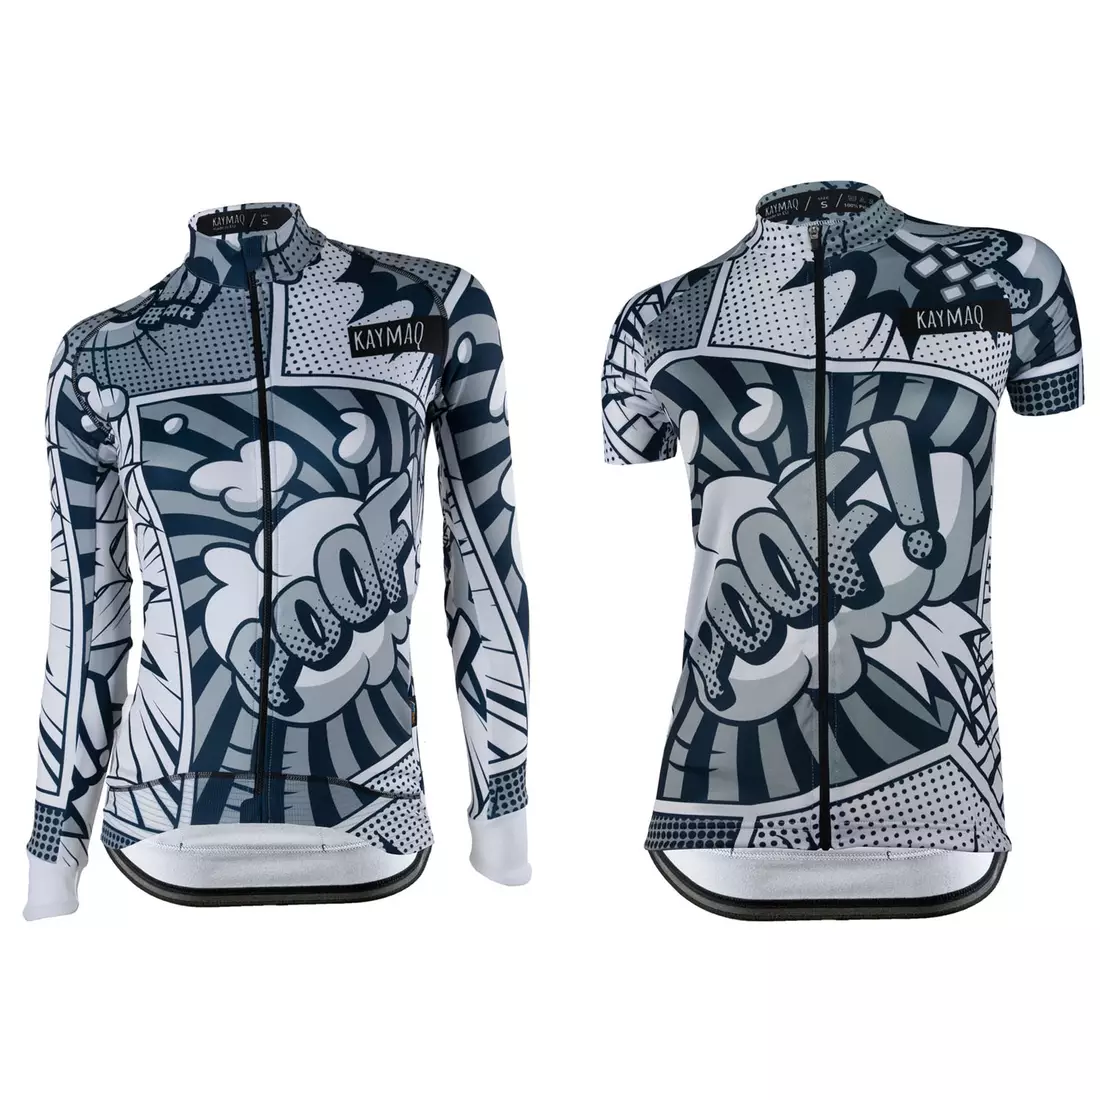 [Set] KAYMAQ DESIGN W24 dámský cyklistický dres + KAYMAQ DESIGN W24 dámský cyklistický dres s krátkým rukávem